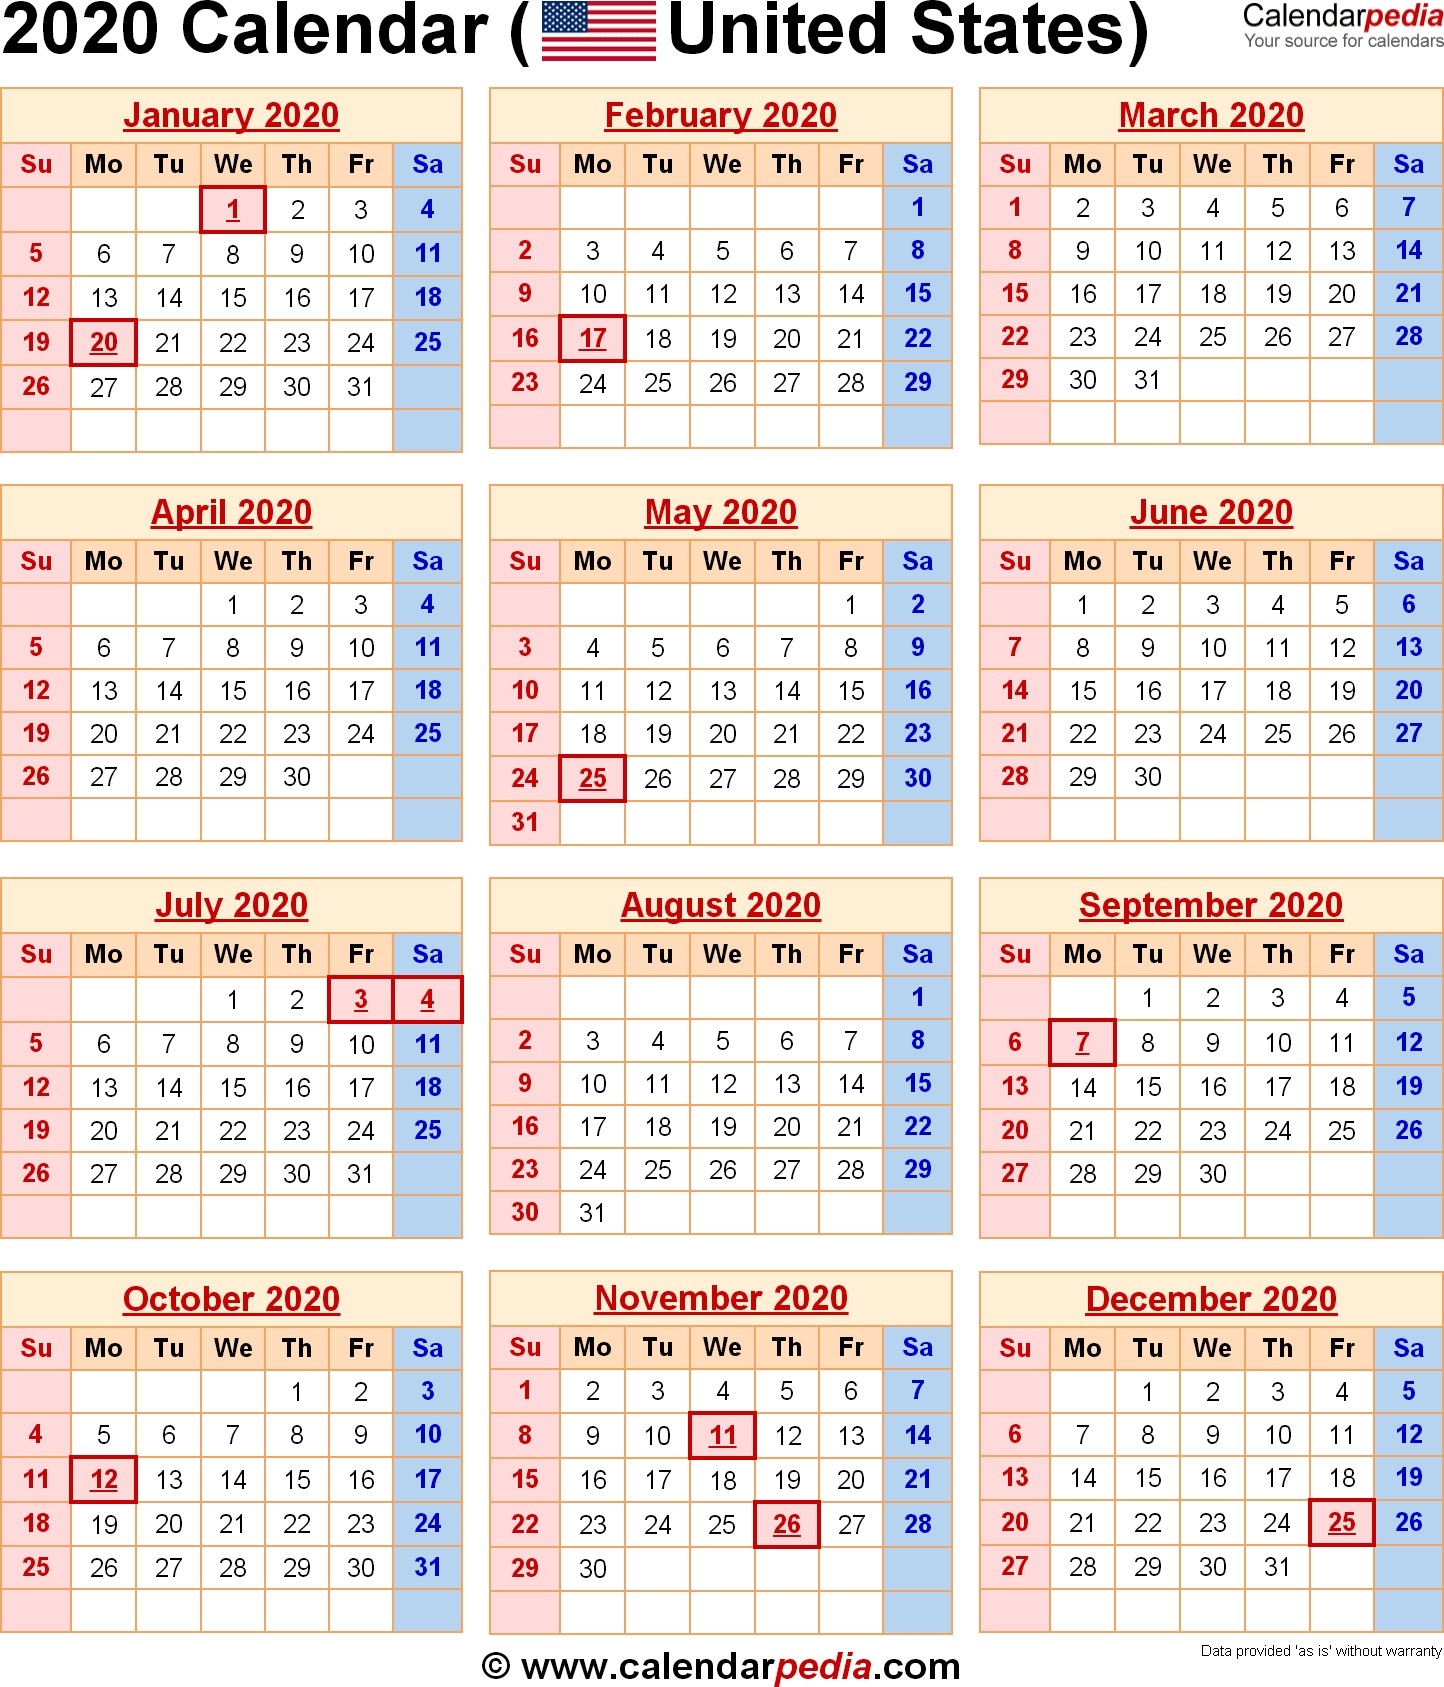 2020 Printable Calendars With Us Holidays 2020 Calendar With Federal Remarkable Us Calendar Holidays 2020